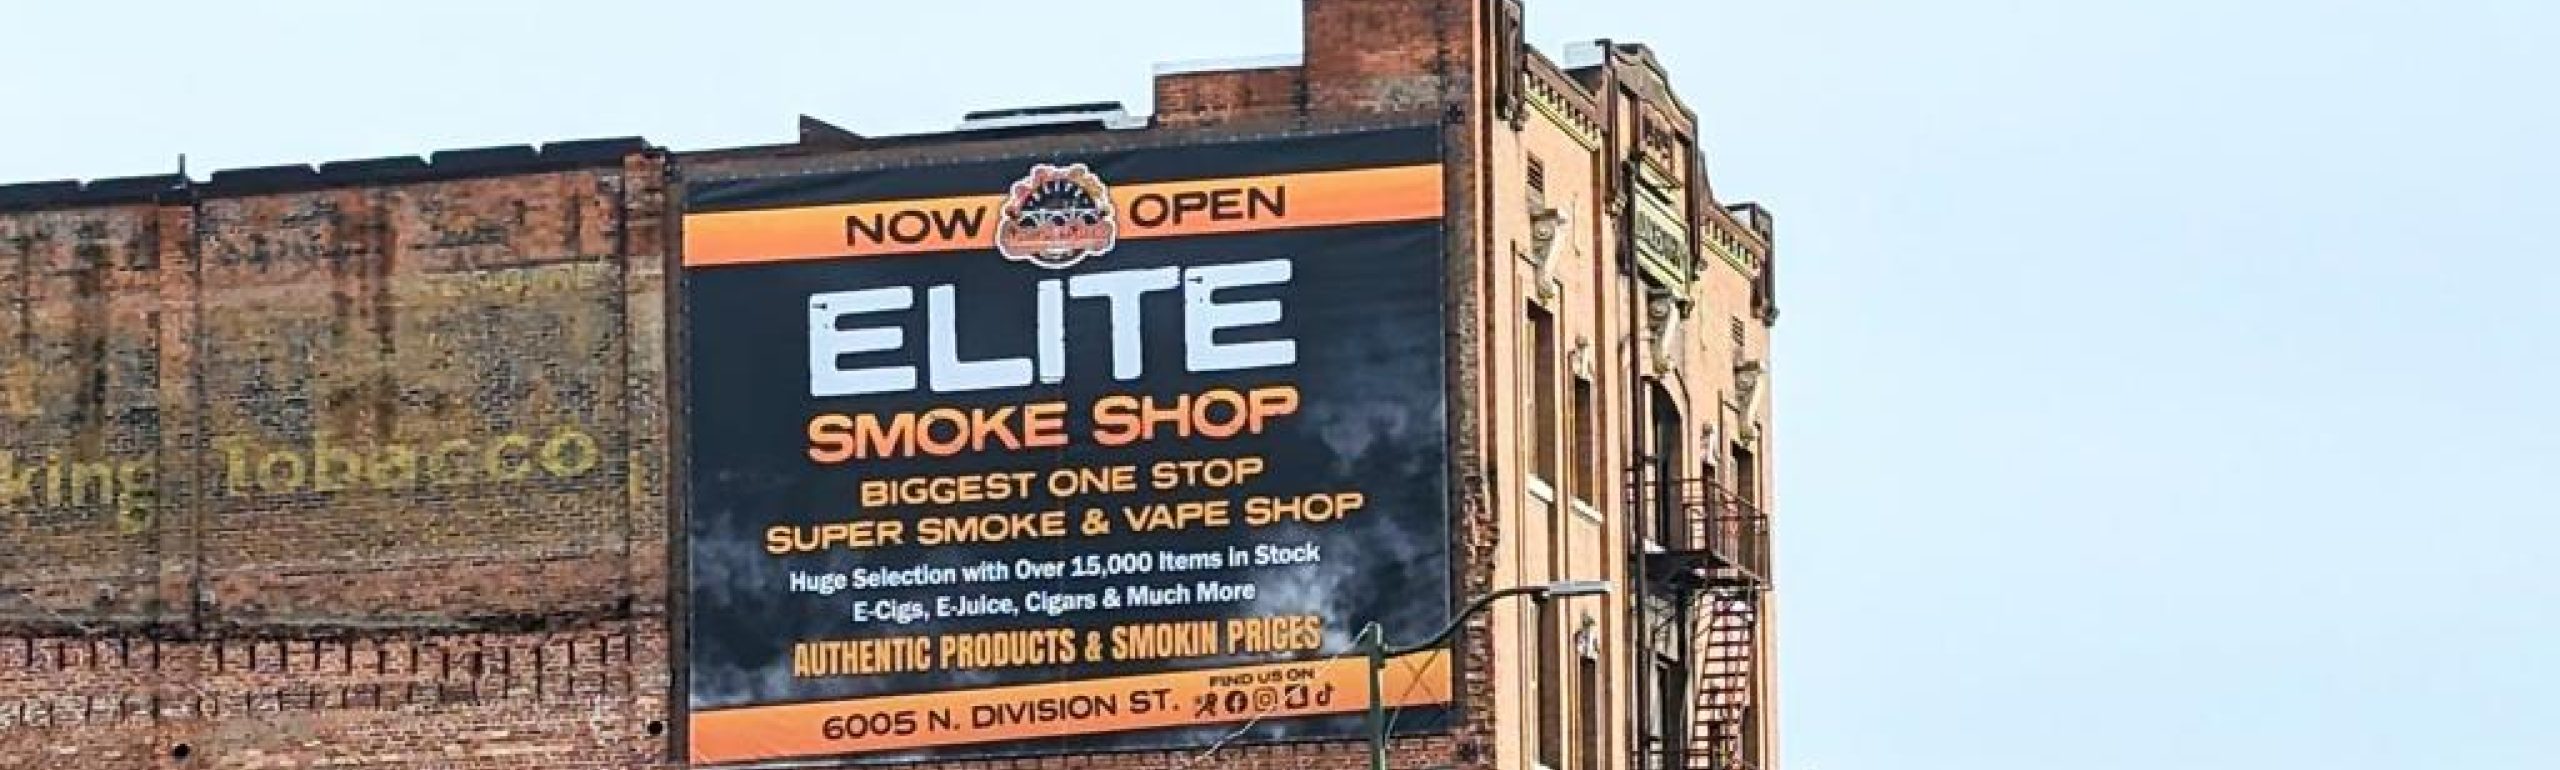 image of elite smoke shop to buy kratom in spokane, washington